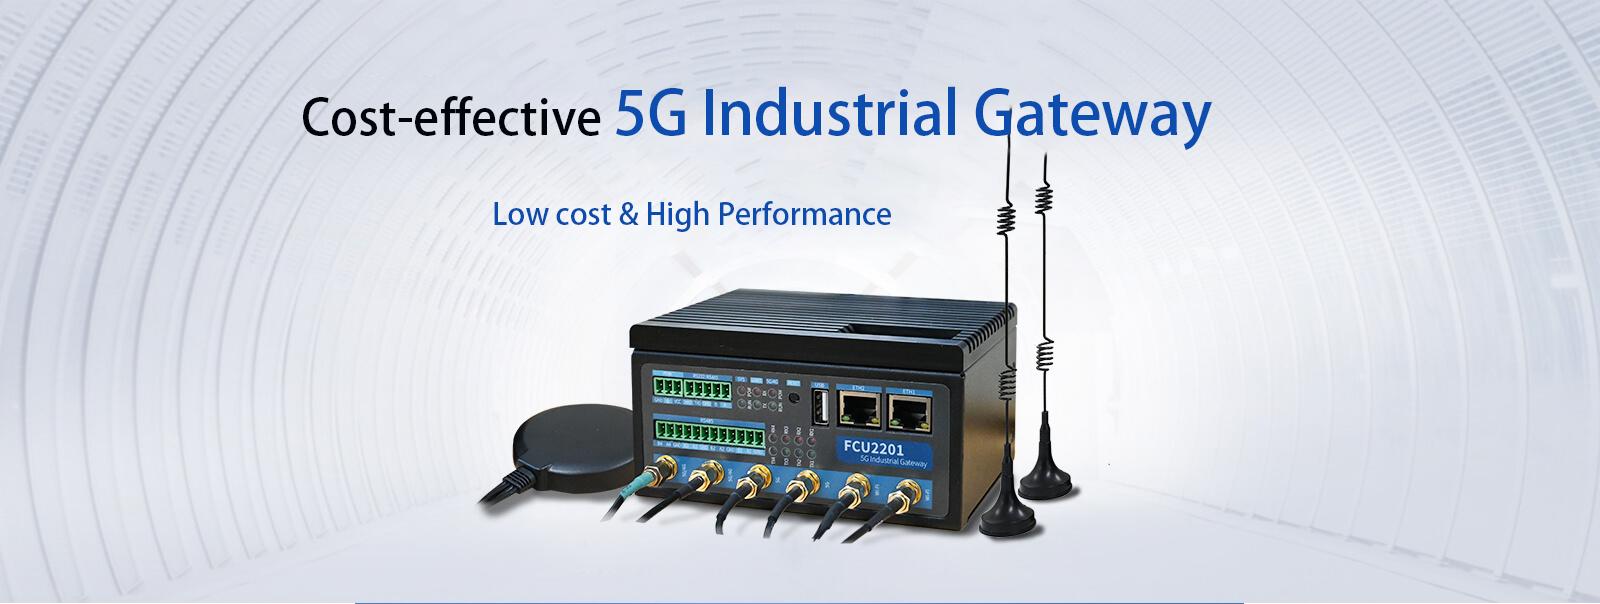 Cost-effective 4G Industrial Gateway